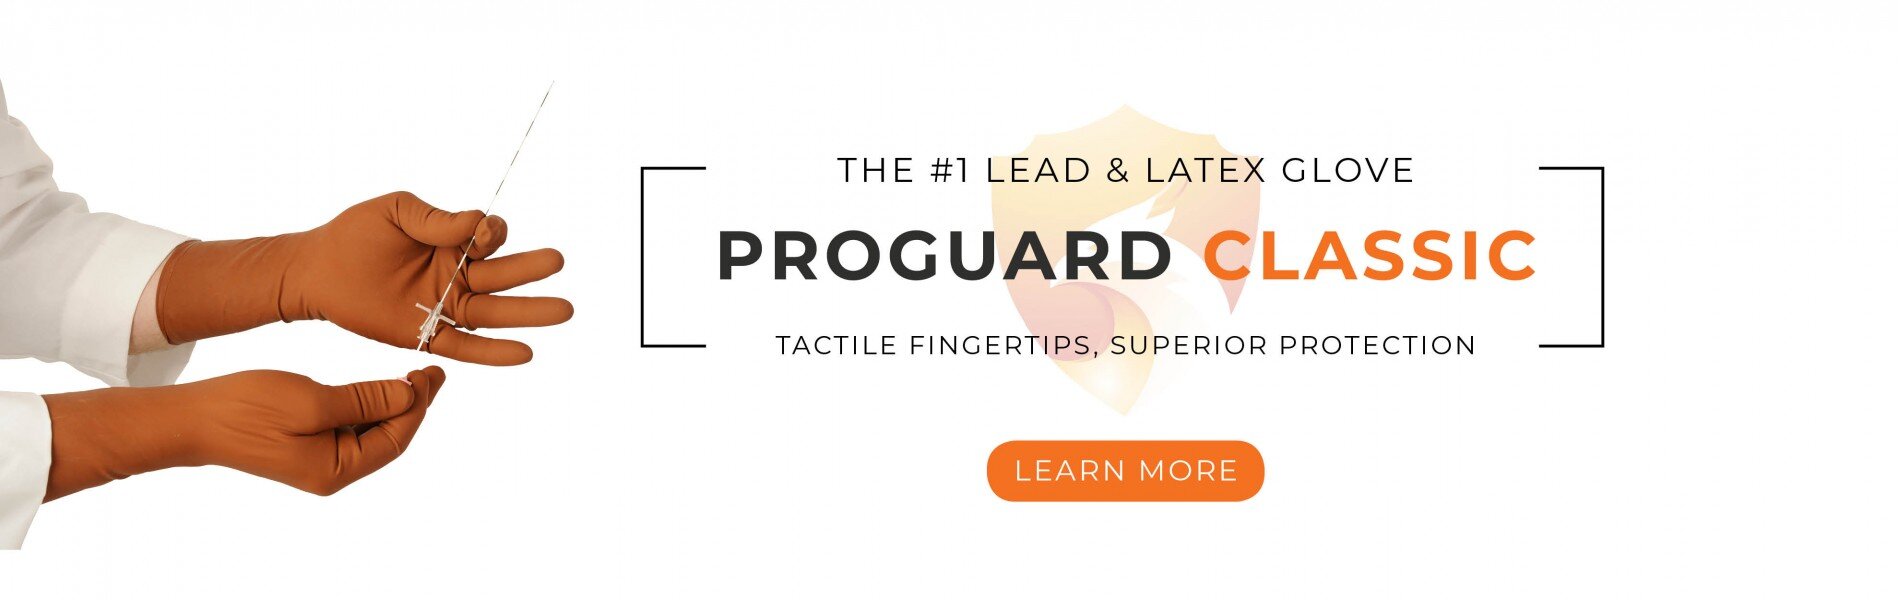 Proguard Classic_2019 main banner-1900x600.jpg